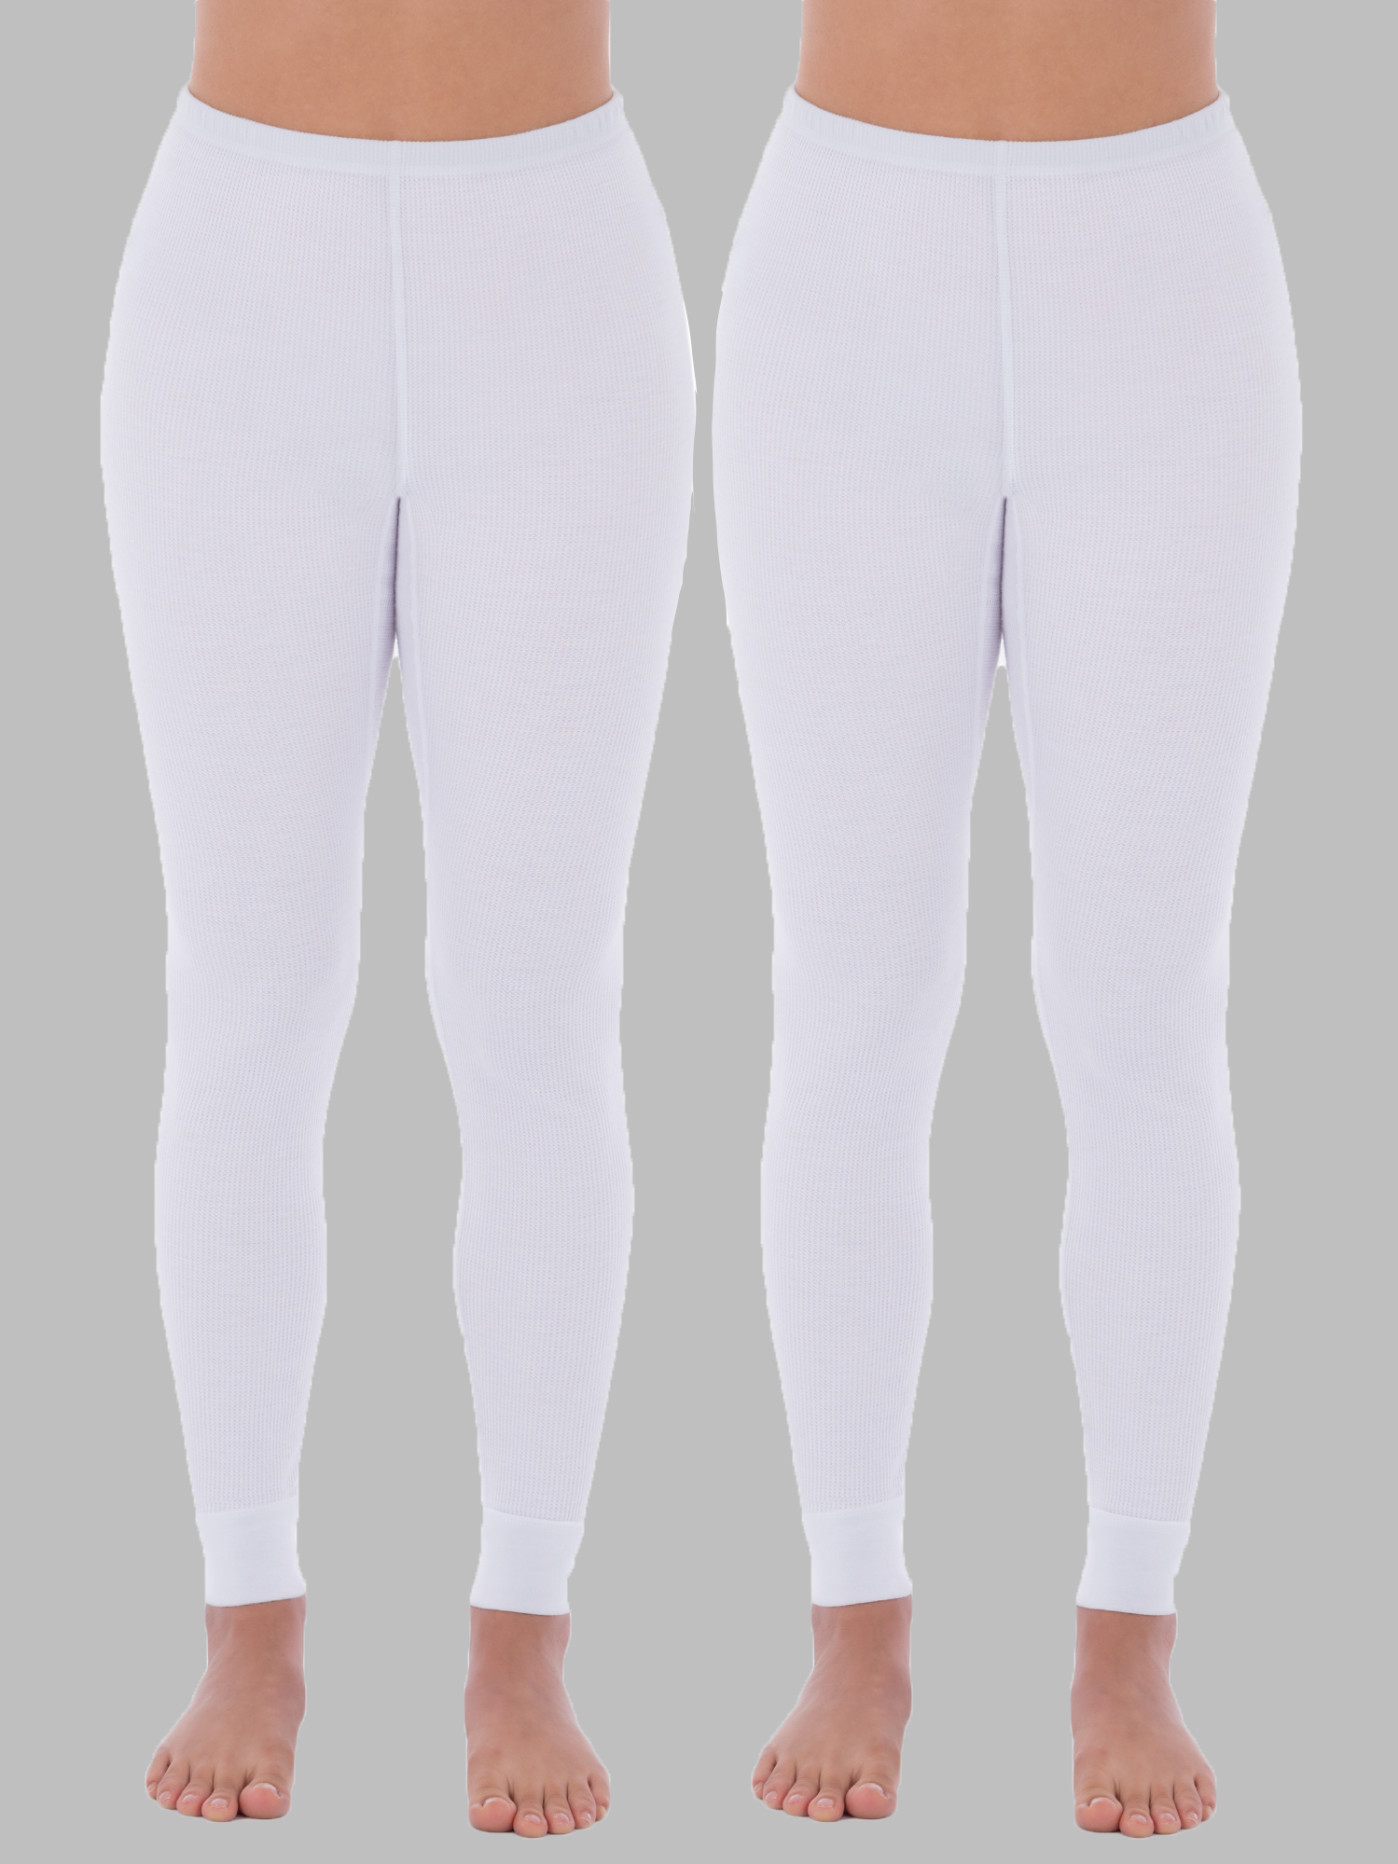 Ultra Dry Women's Thermal Underwear Set, Heather Gray, 3X-Large